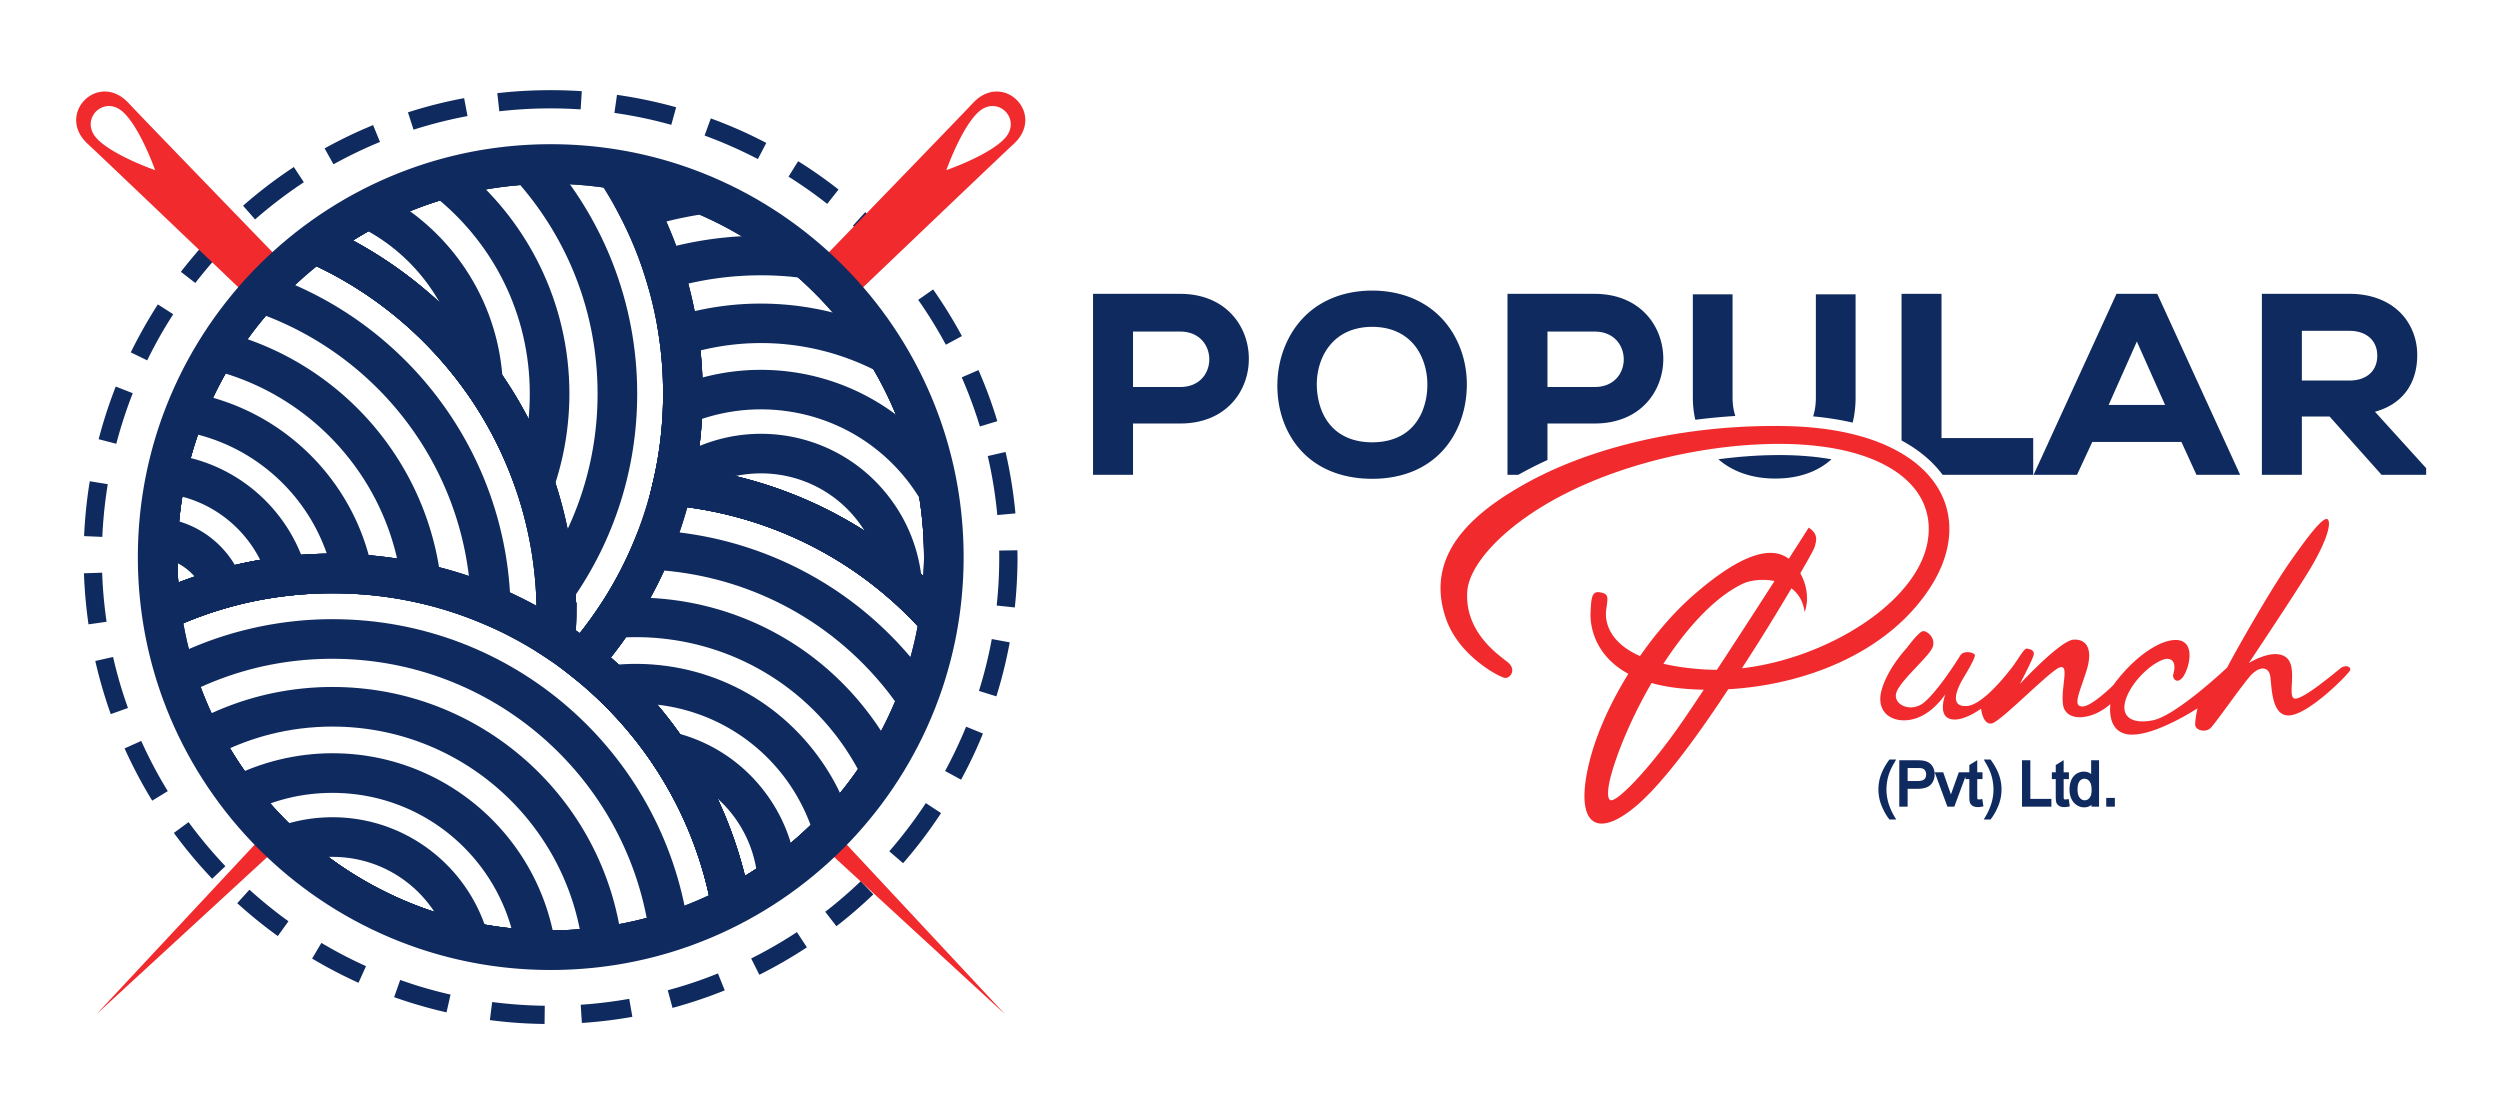 Popular Punch (Pvt) Ltd